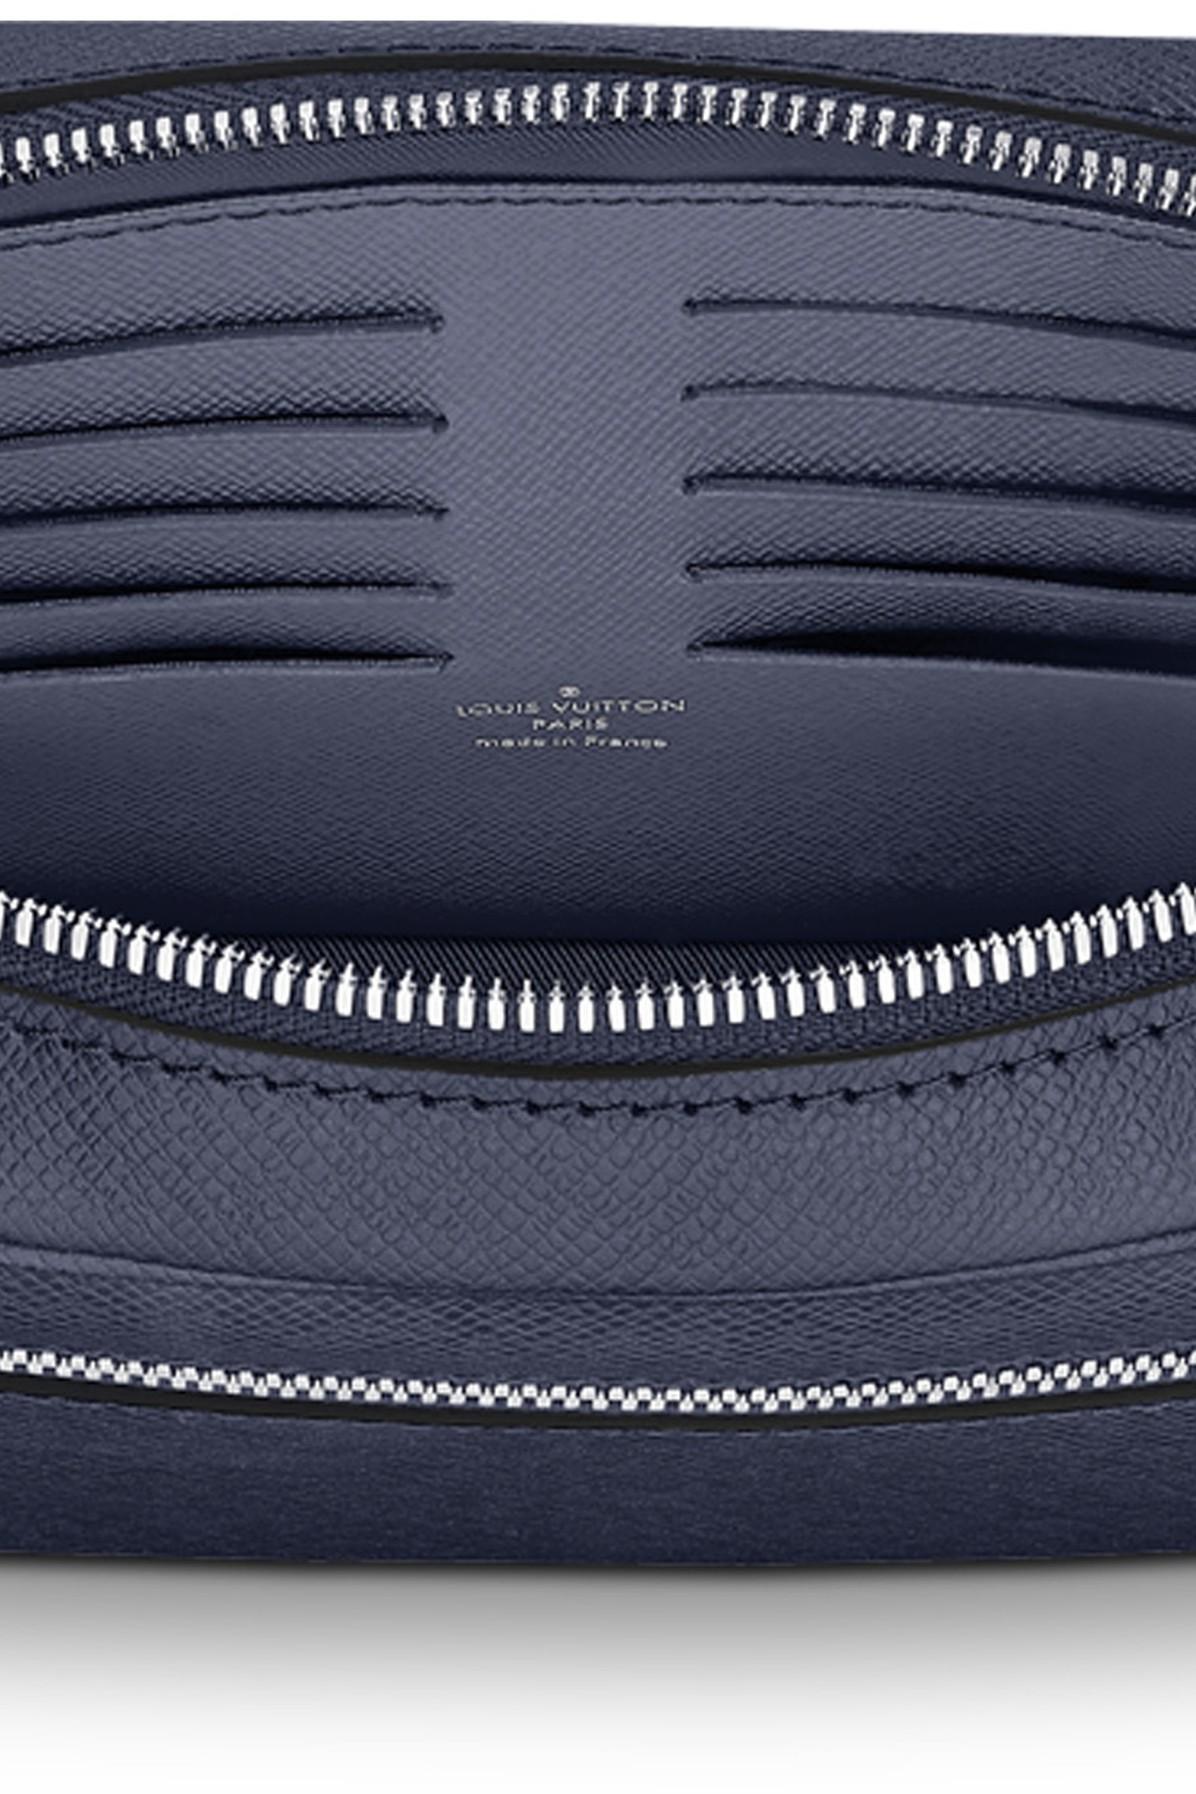 Louis Vuitton Kasai Clutch Epi Leather - Kaialux